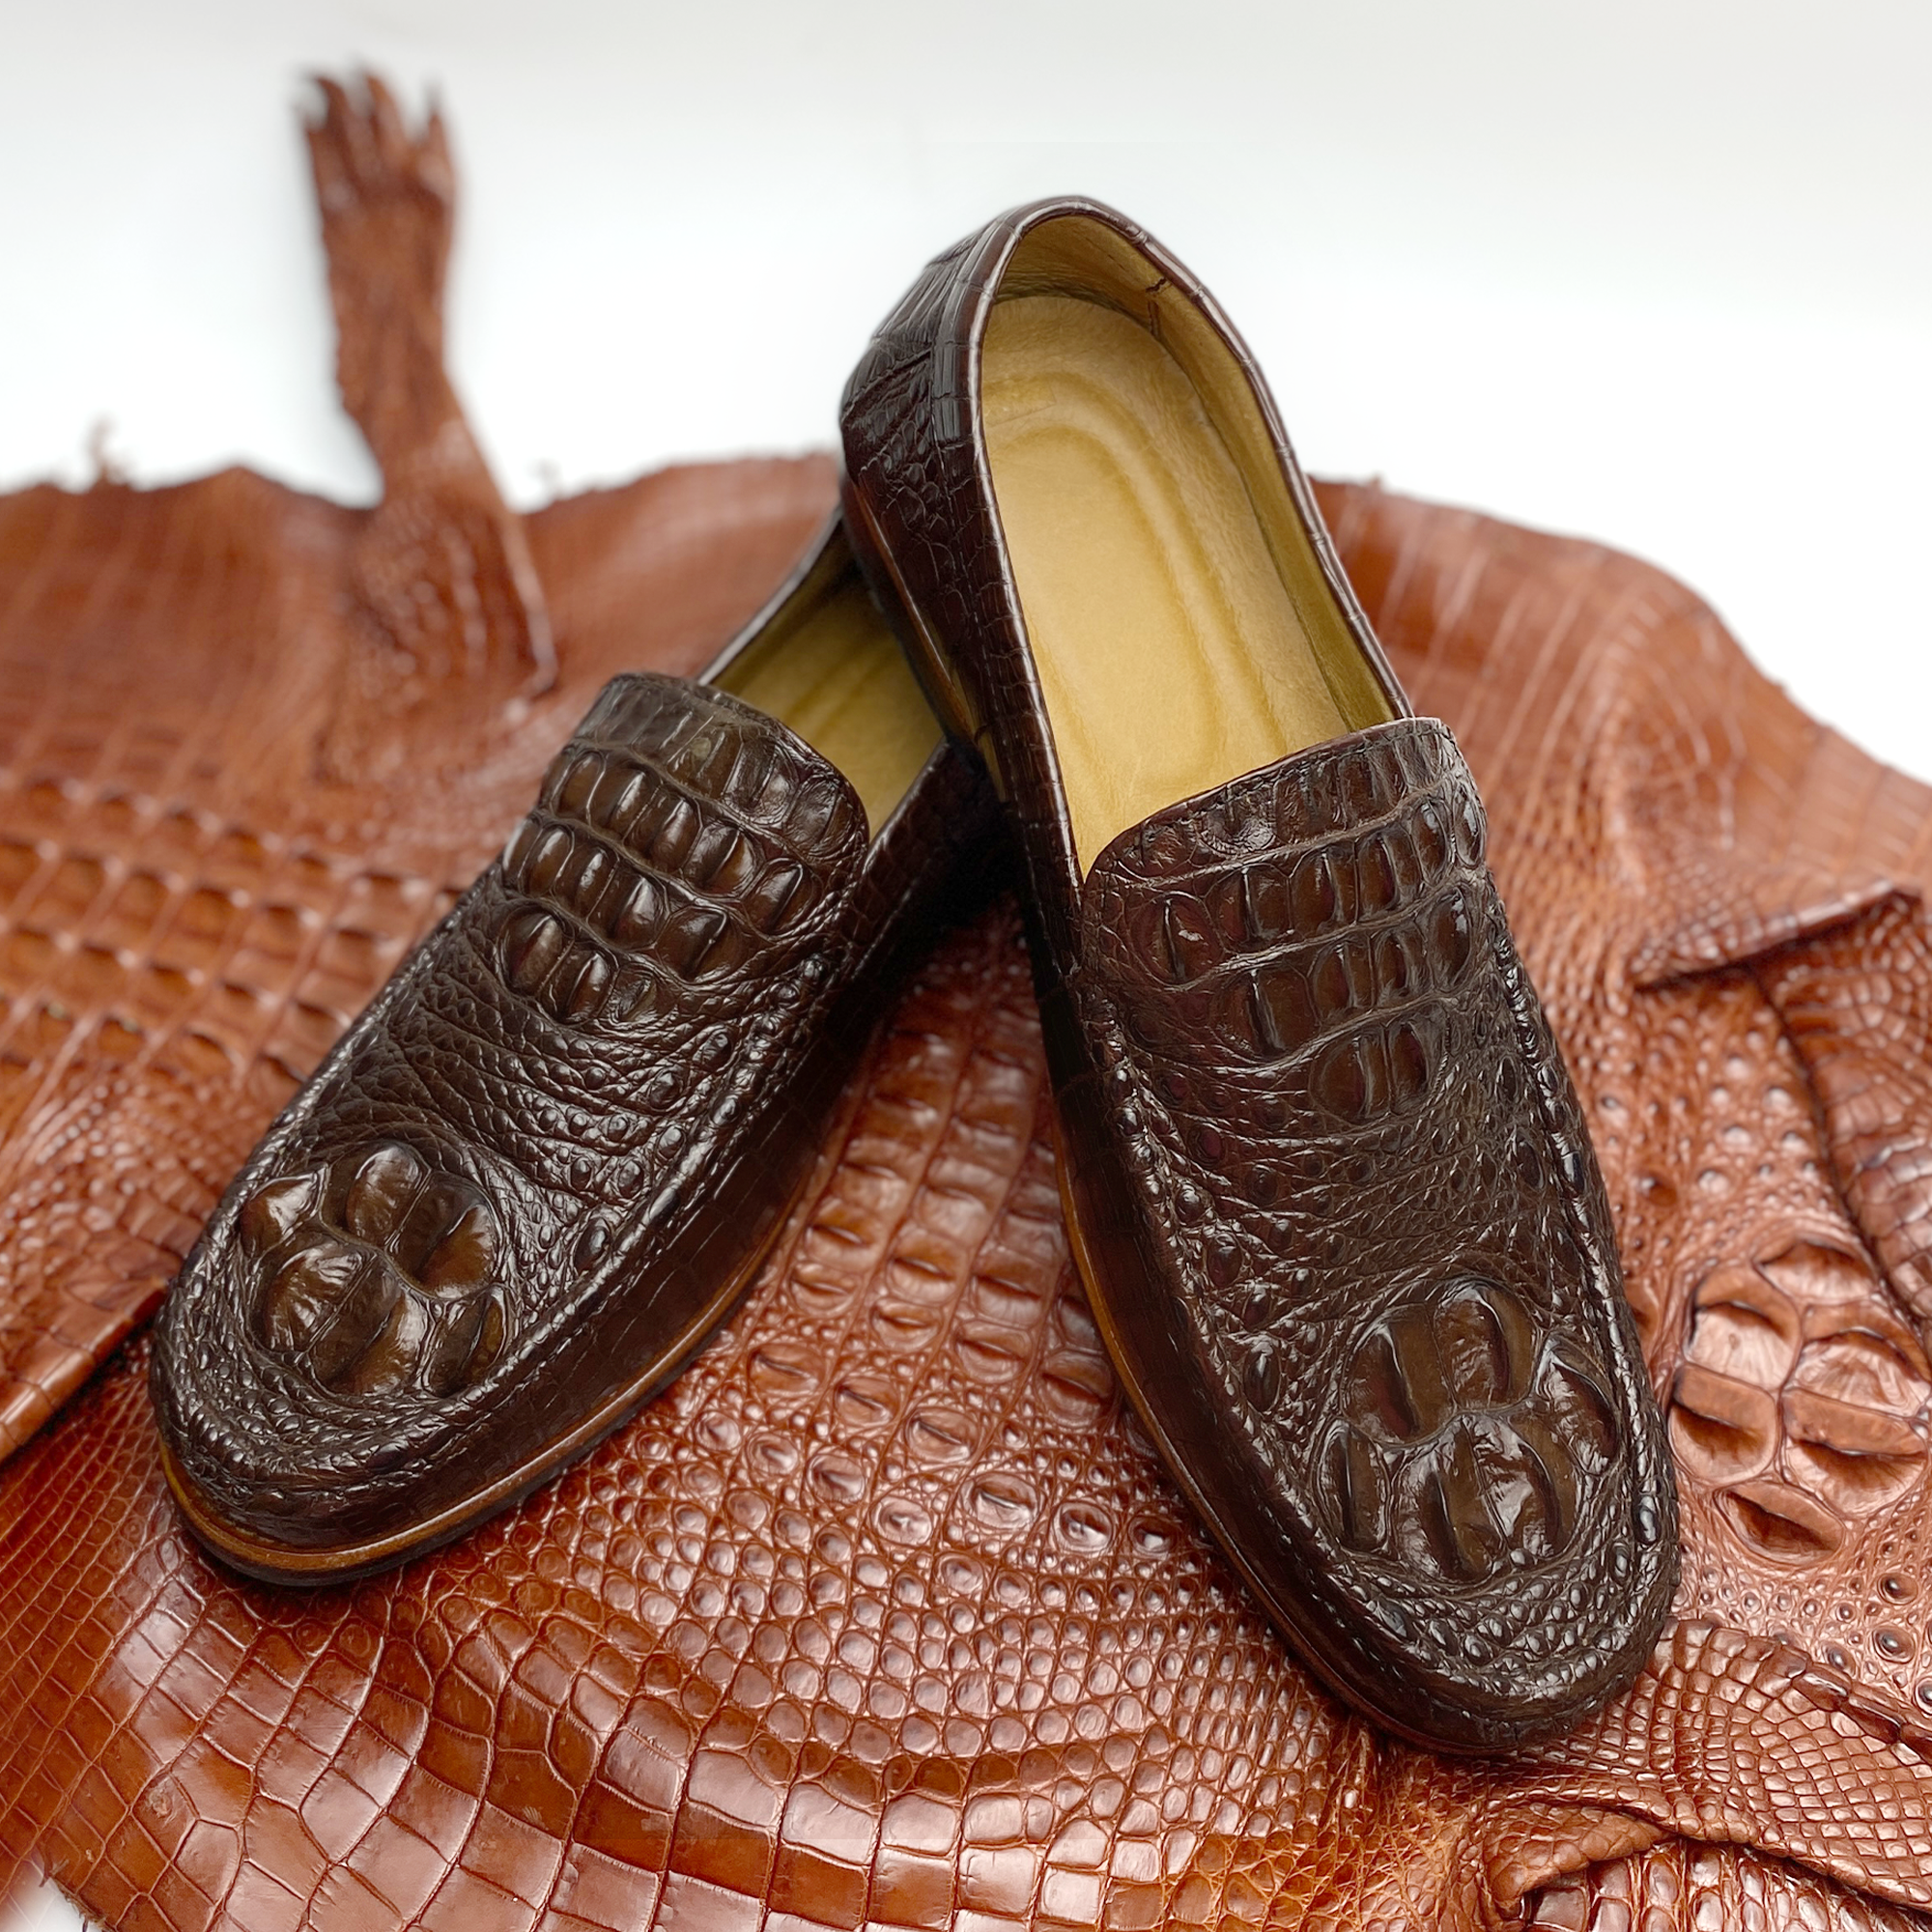 Classic Dark Brown Alligator Boat Shoes Men | Crocodile Men Moccasin Leather Shoes | SH83K42, Dark Brown / 12